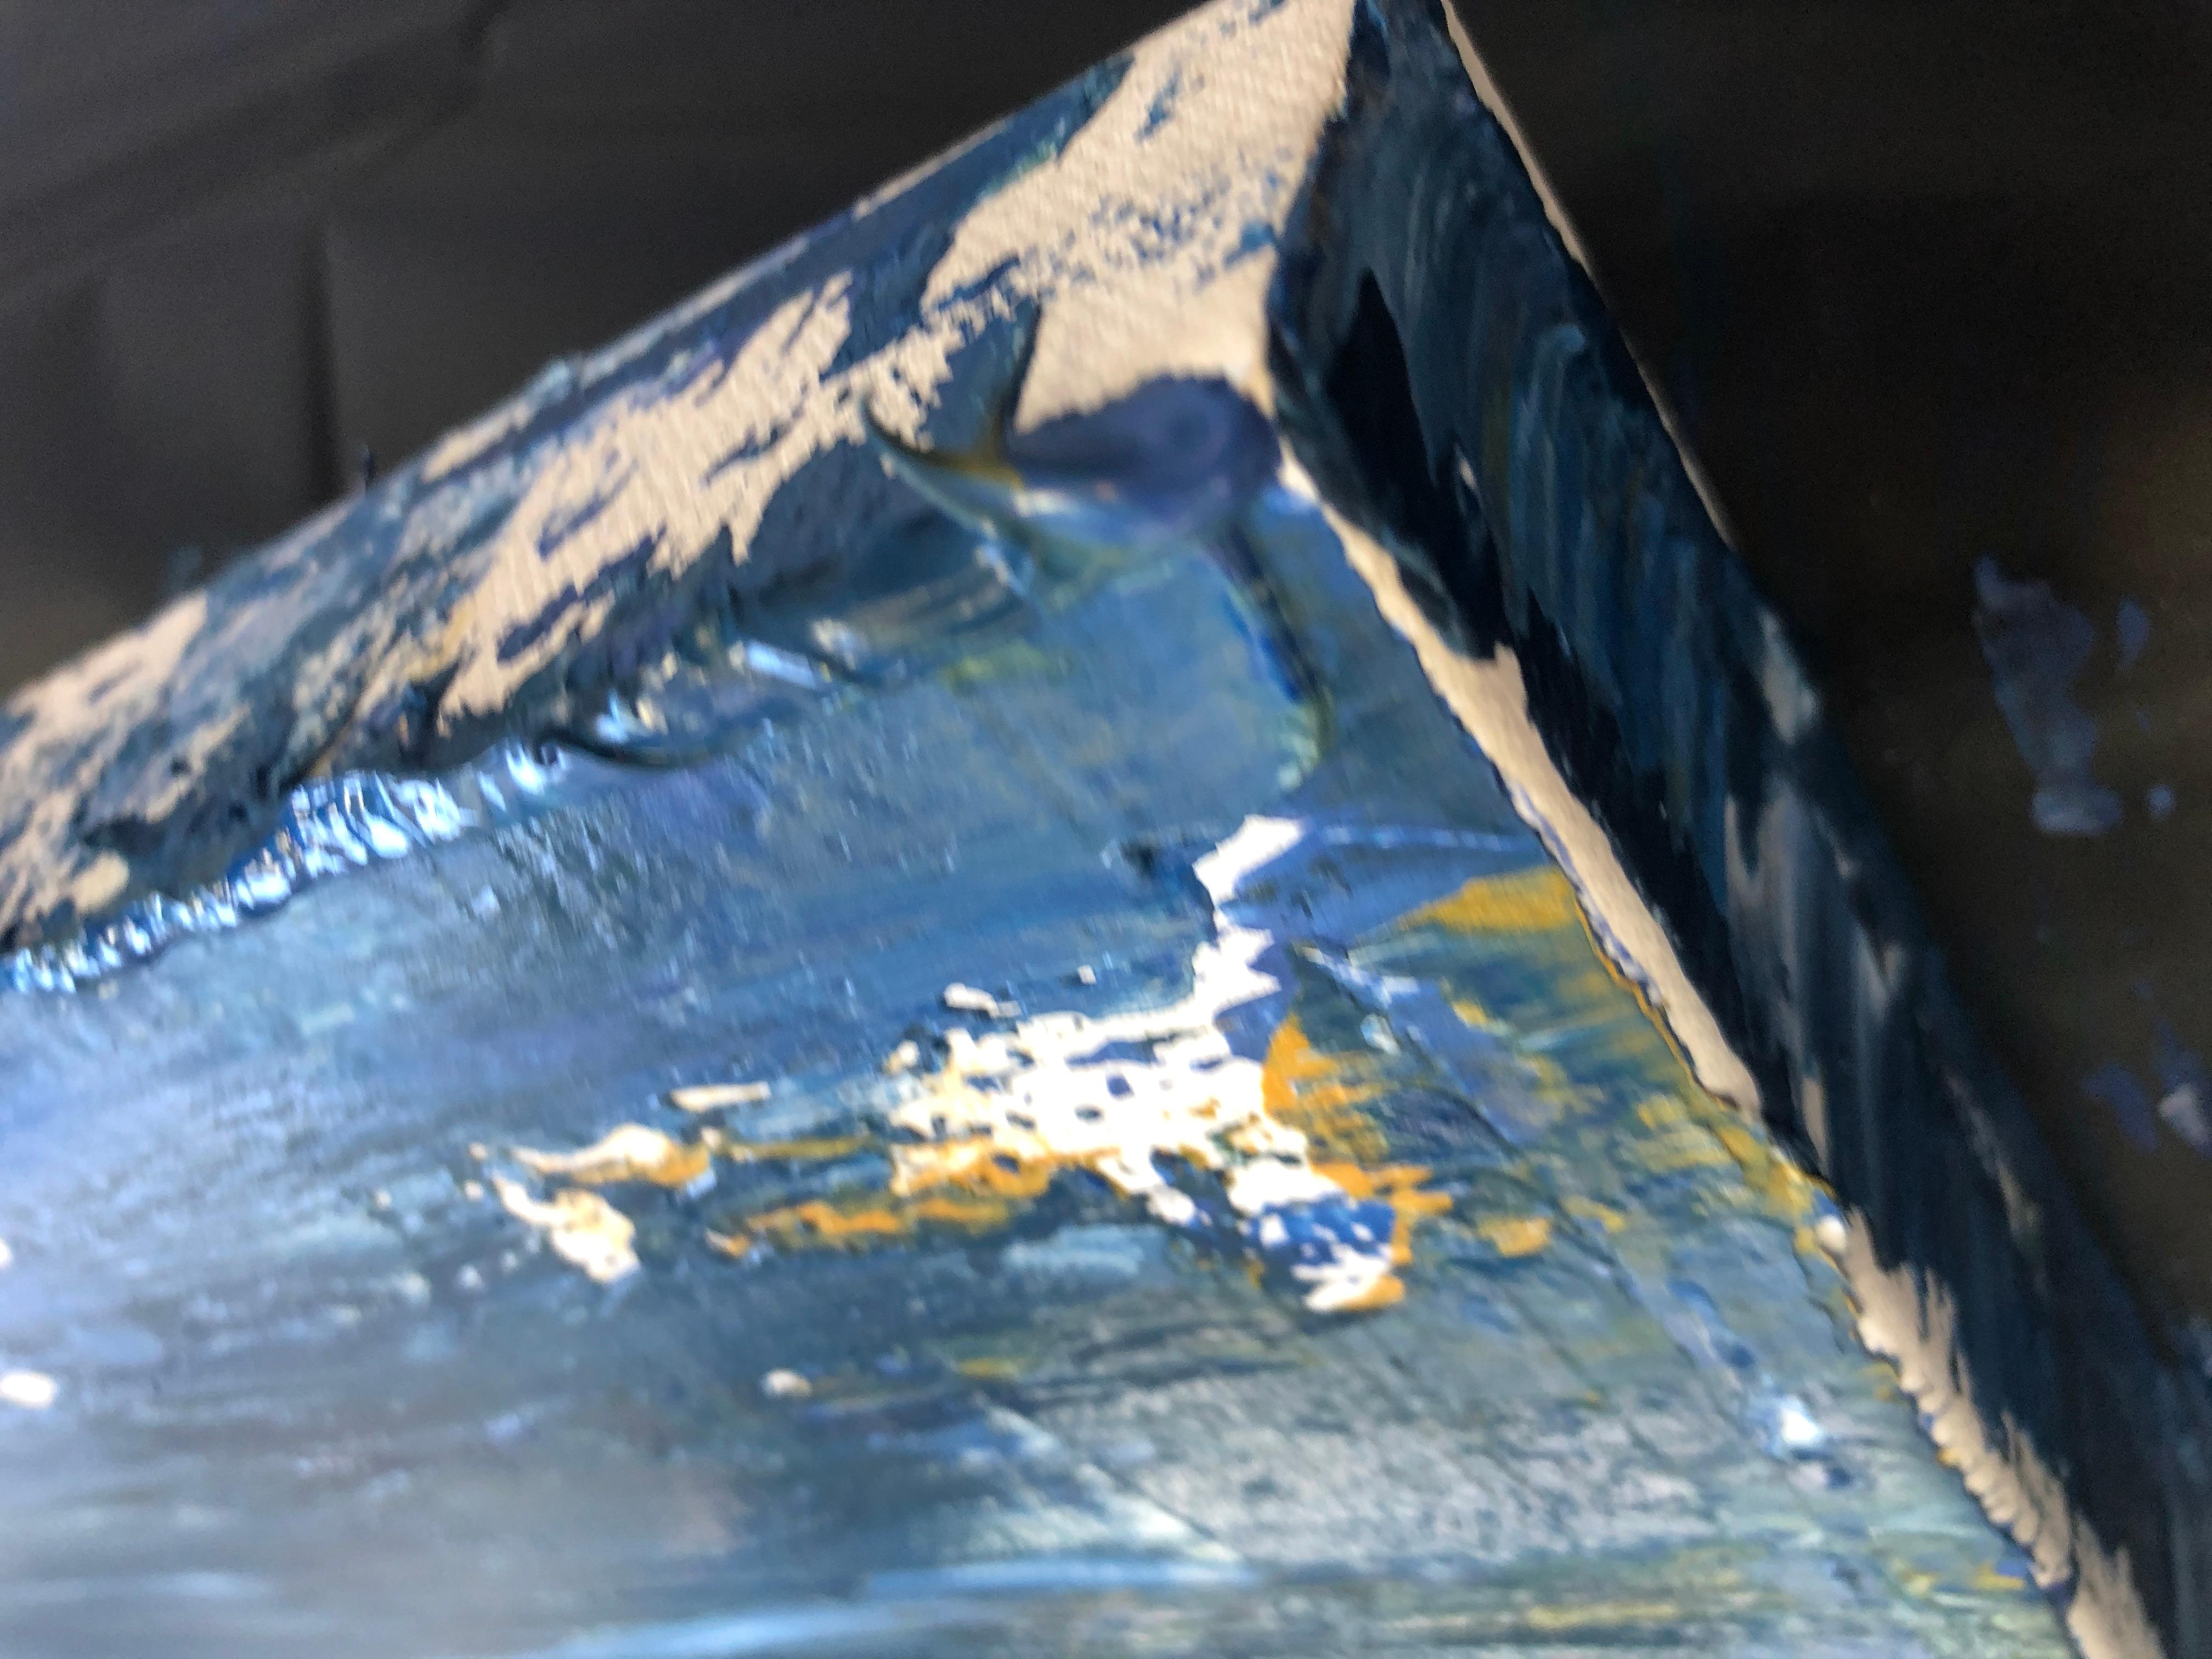 Midnight Blue Gold Abstrakt Heavy Textured Mixed Medium auf Leinwand, 36 x 48